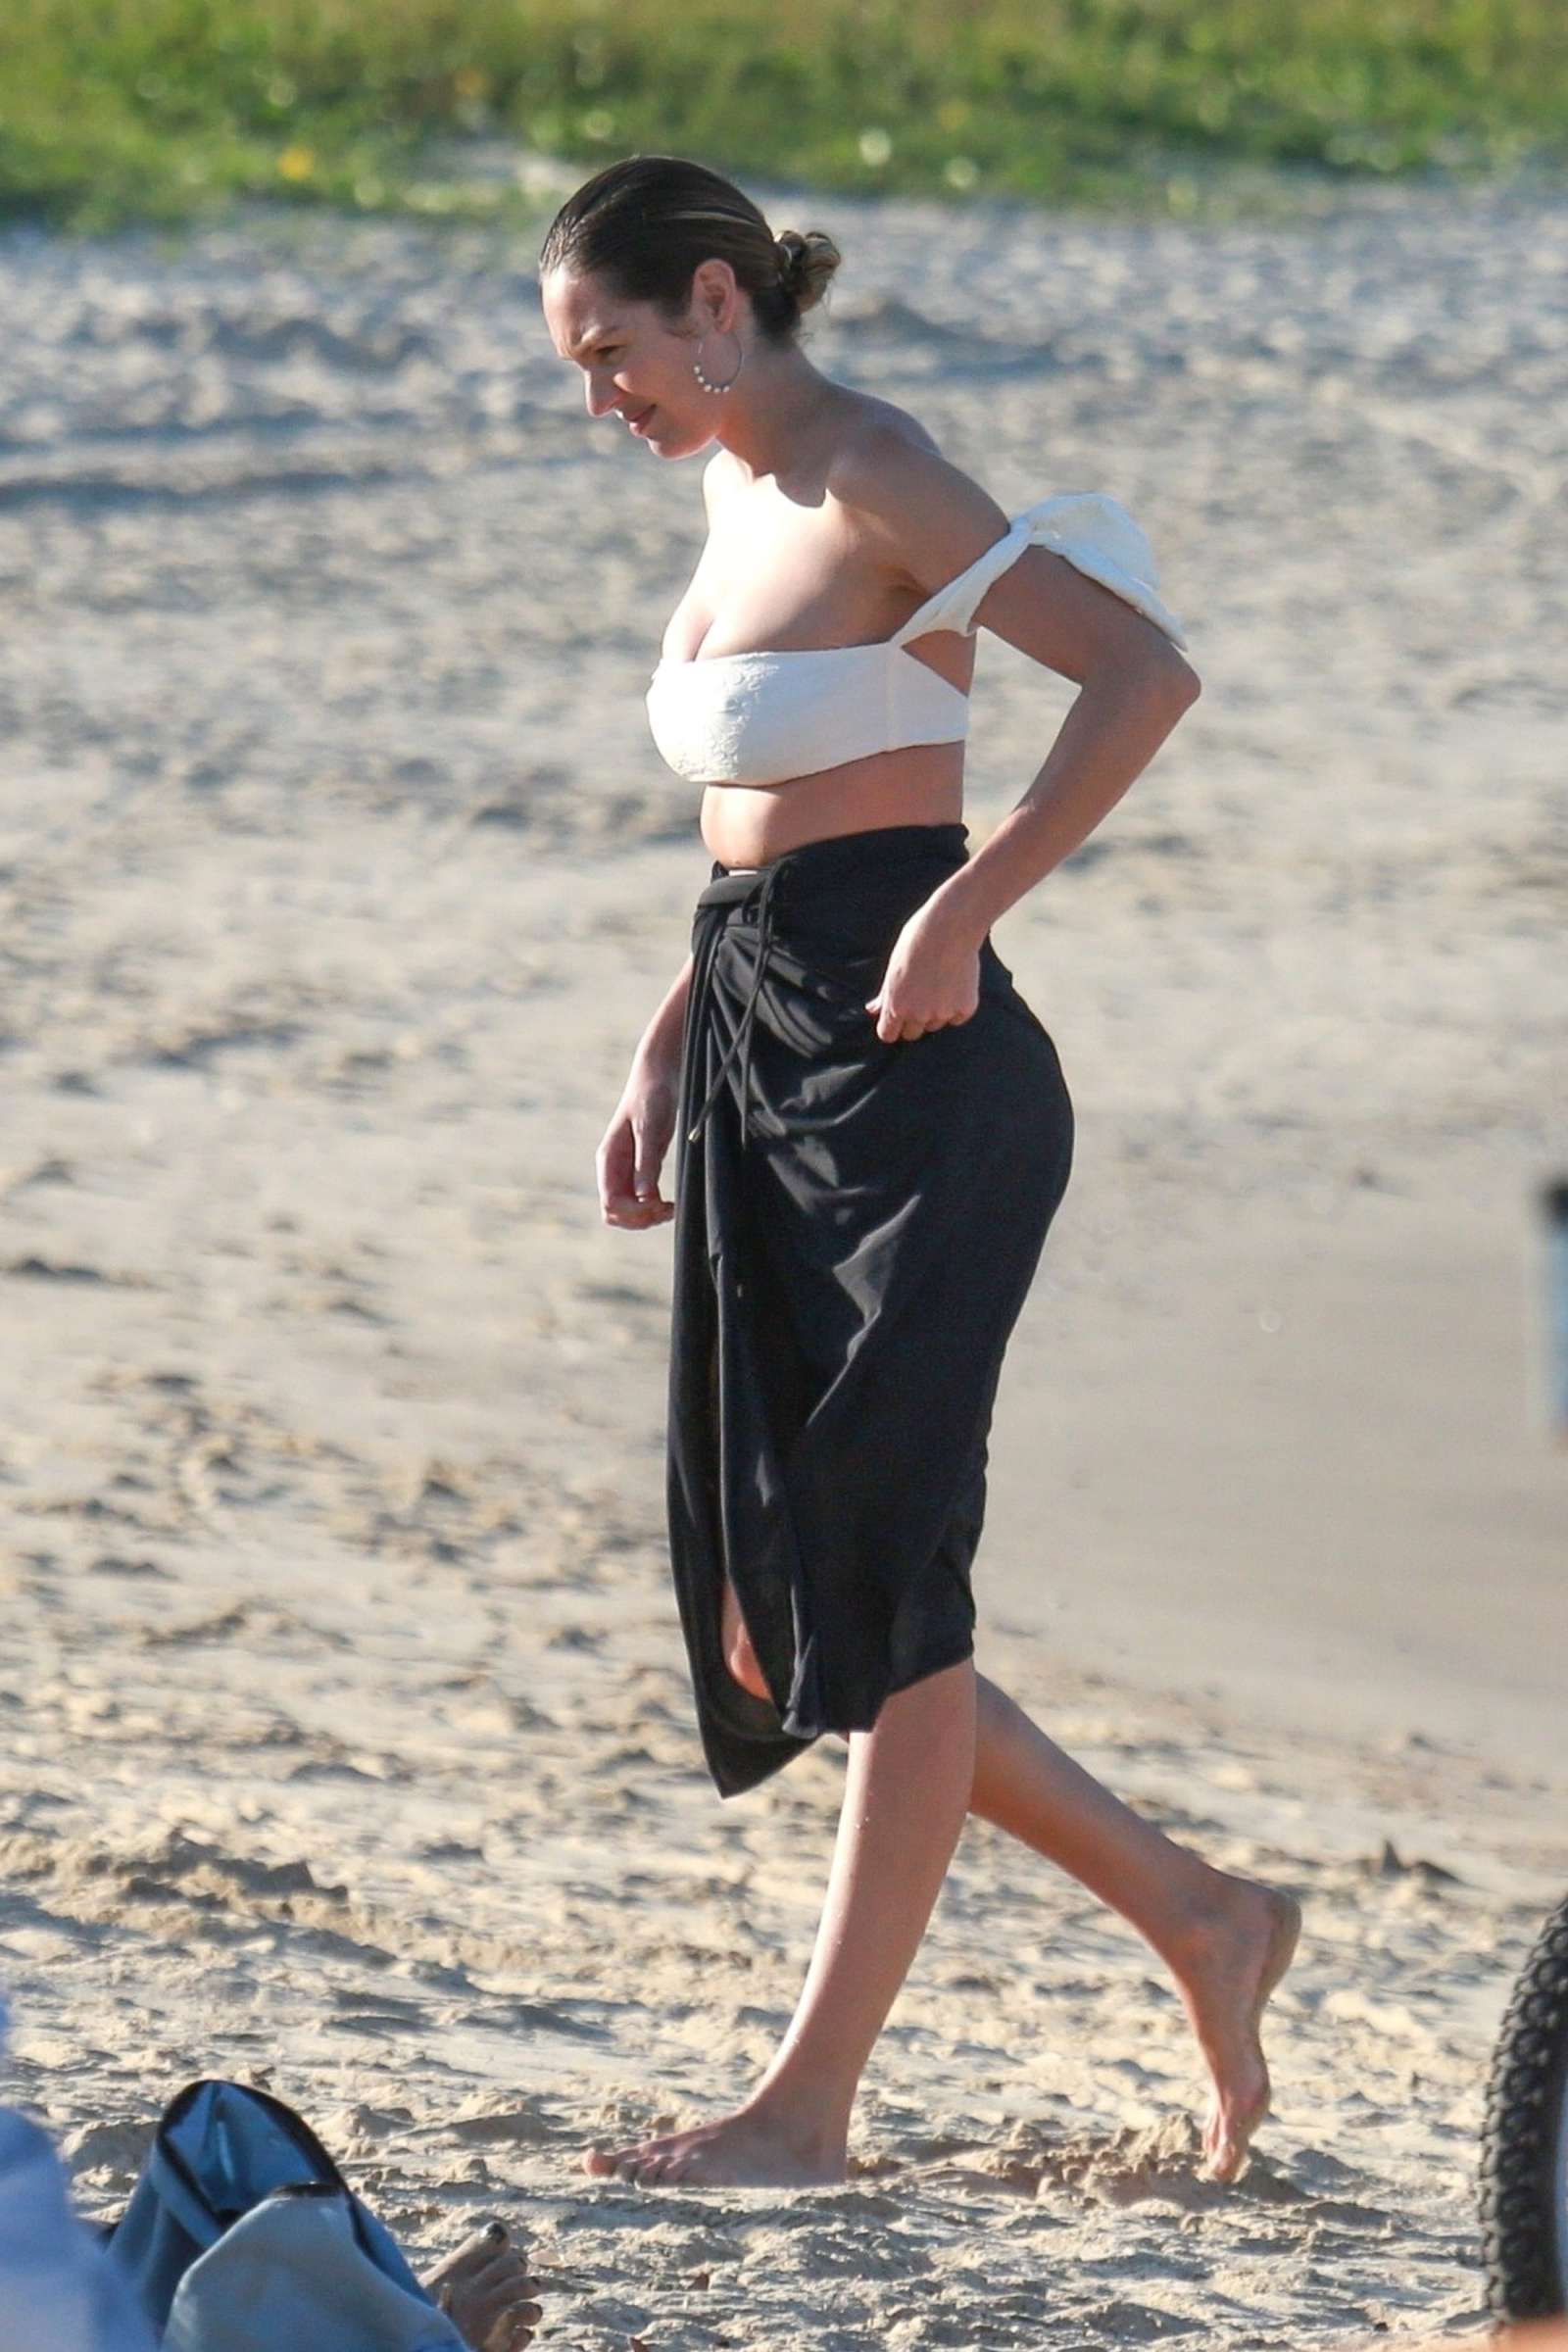 Candice Swanepoel in White and Red Bikini on the beach in Vitoria